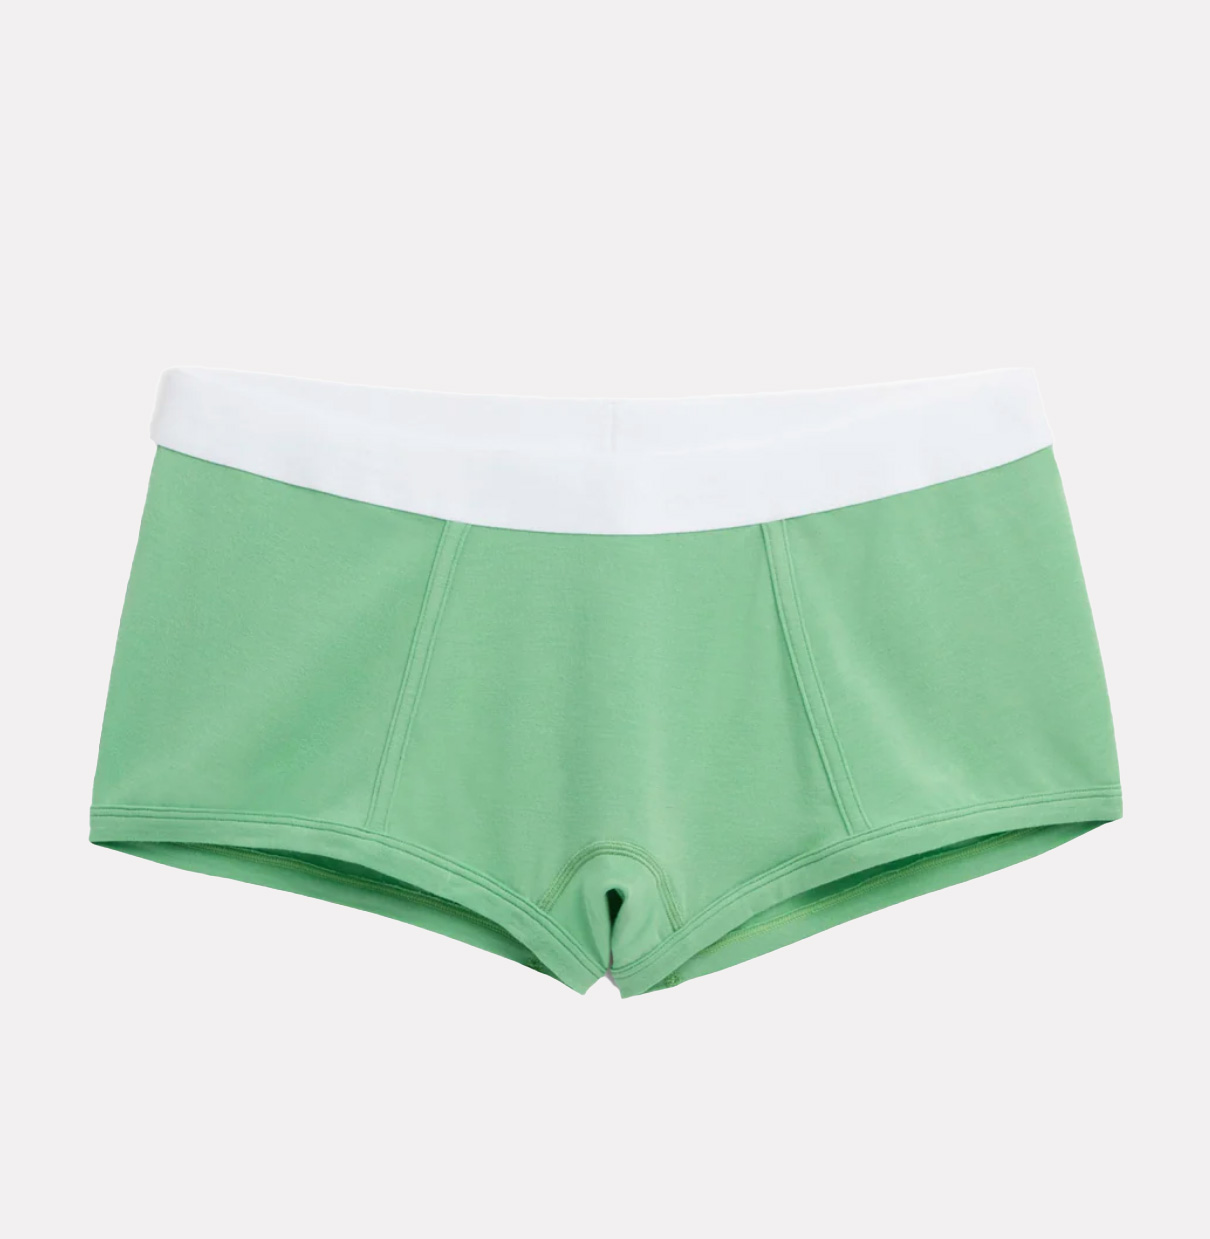 Pear Green Unity Underwear - The Most Comfortable Underwear For Men